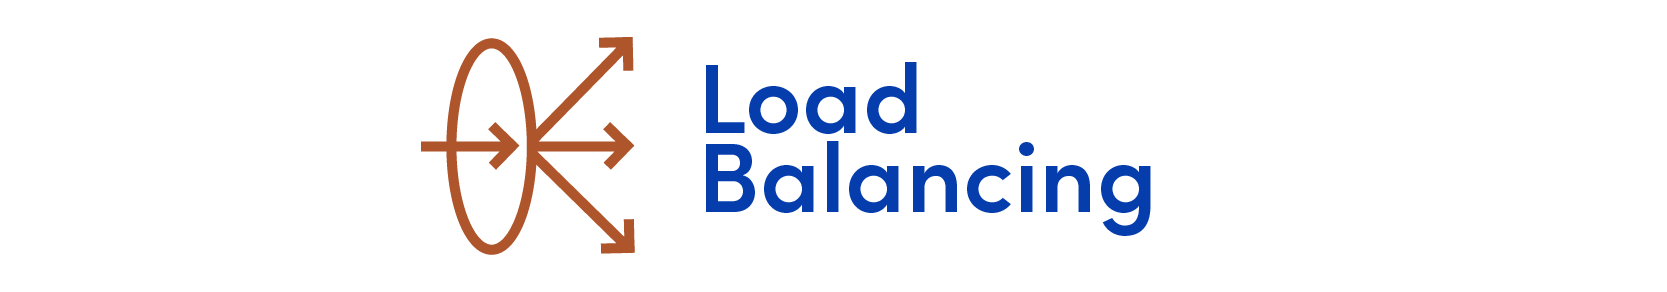 TC Web_IAAS Headings-load-balancing